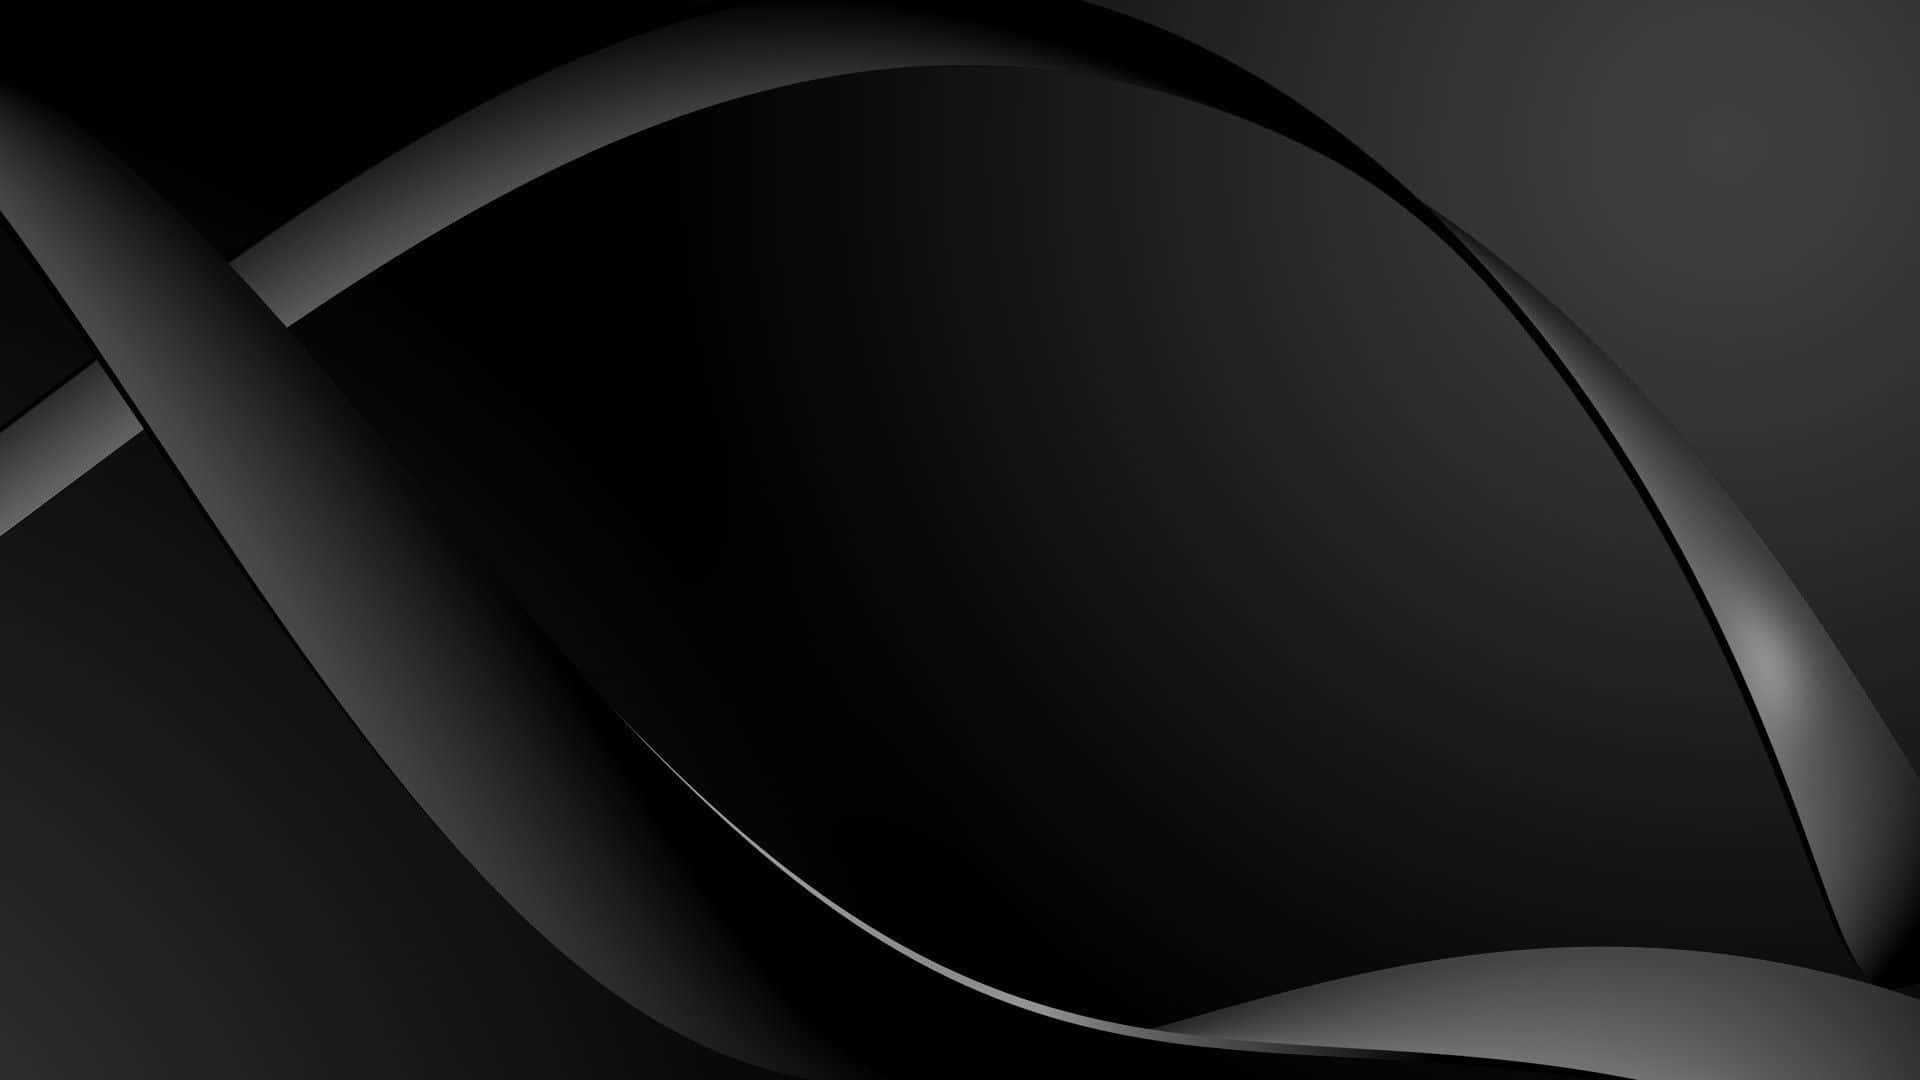 Unosfondo Nero Con Una Forma Curva